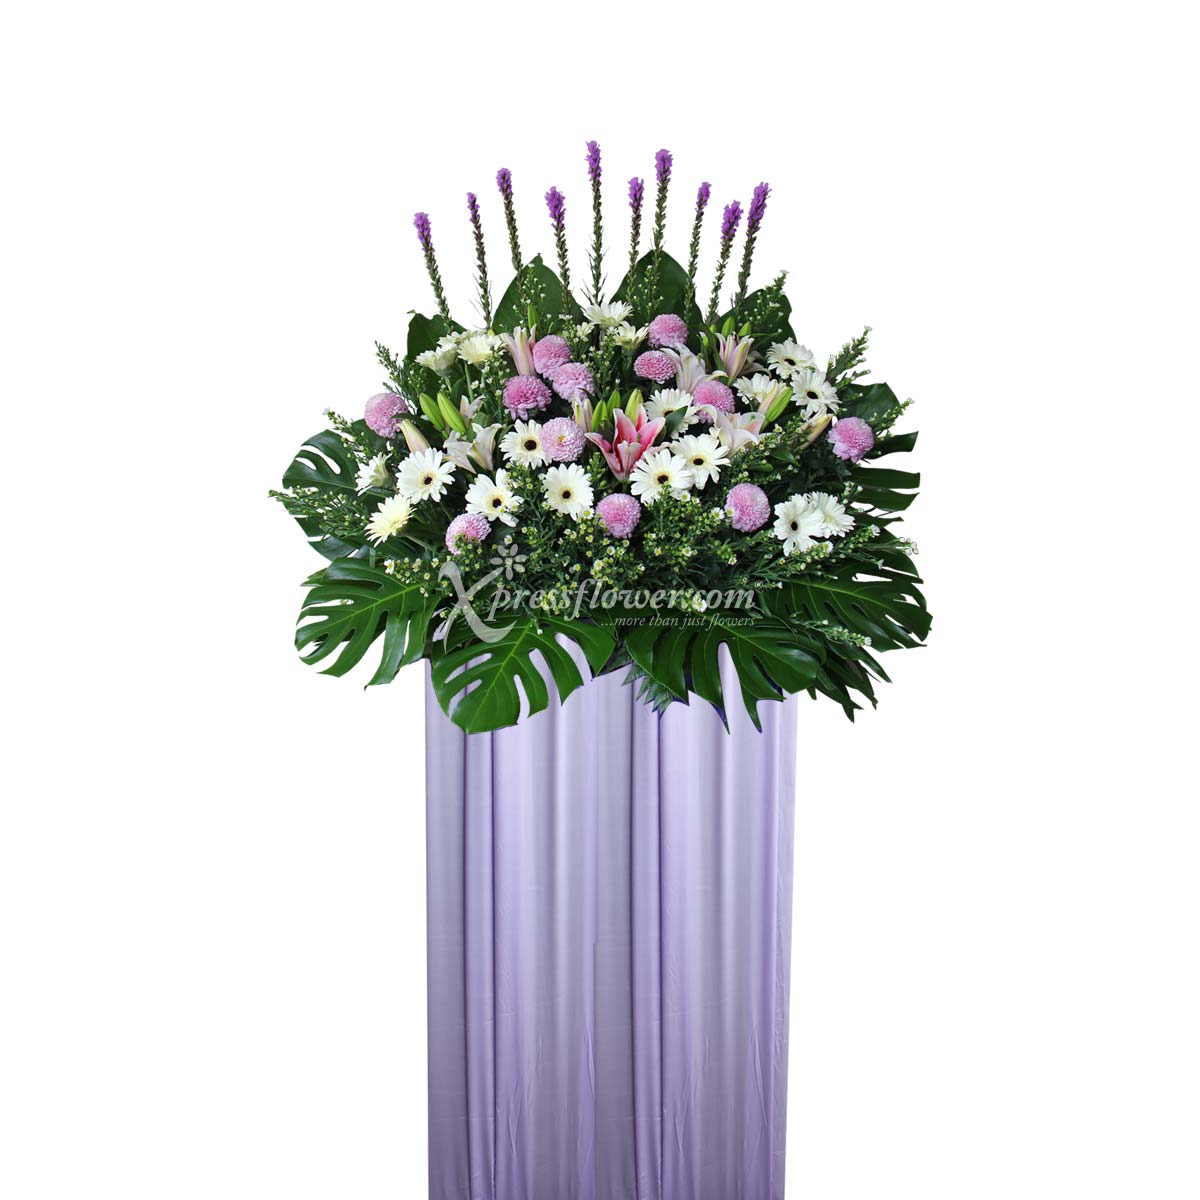 SC1807 Everlasting Memories Wreath Funeral & Condolence Flower Stands